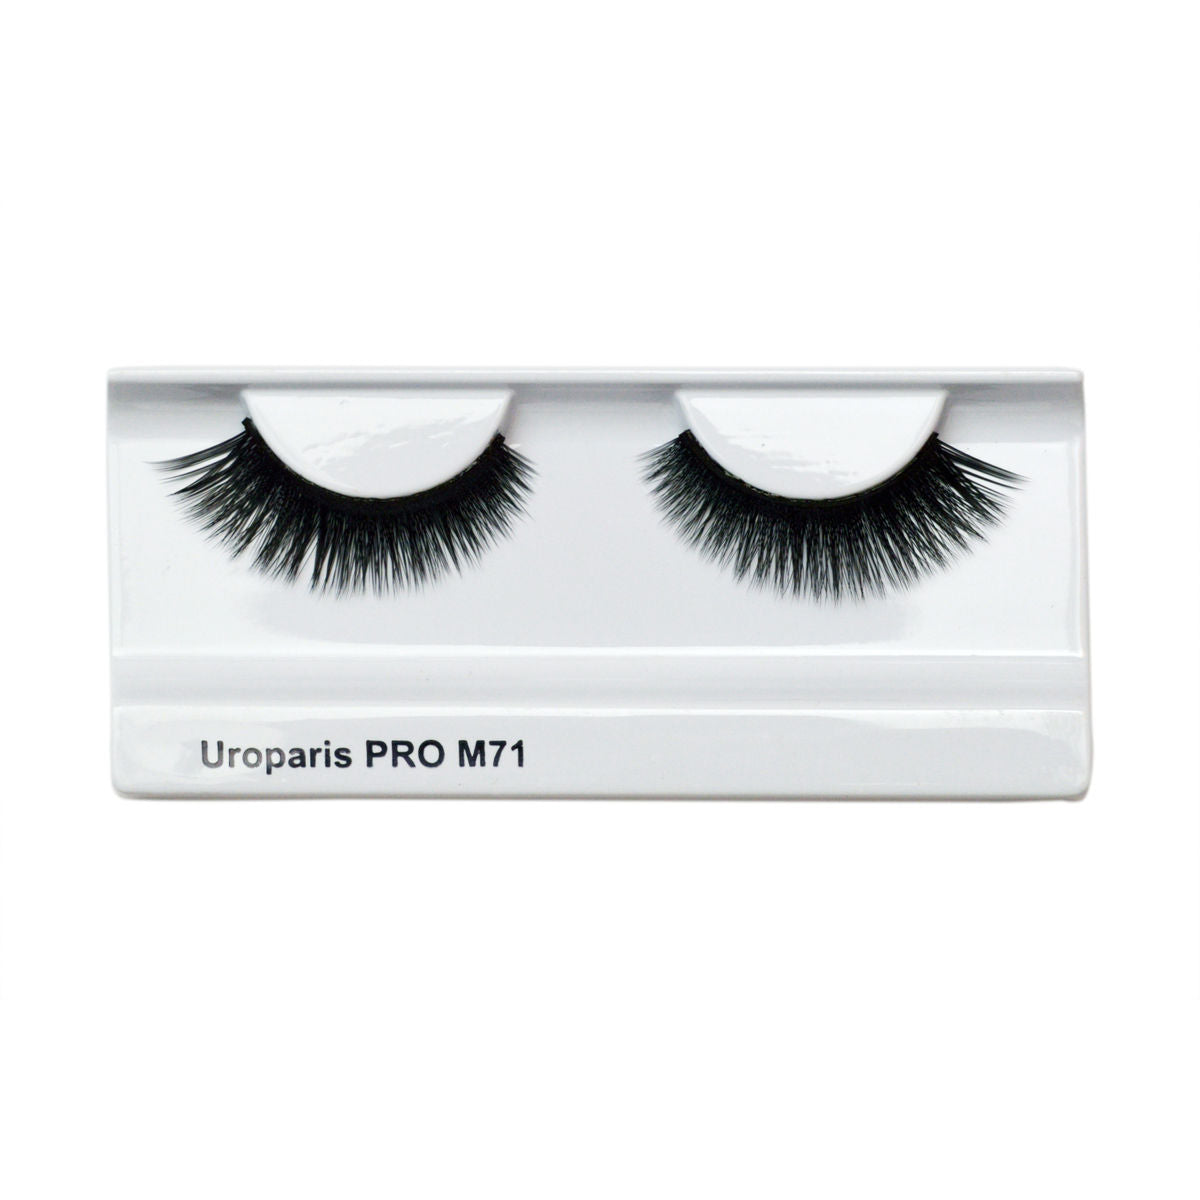 Uroparis Faux Mink Eyelashes Pro M71 Uroparis